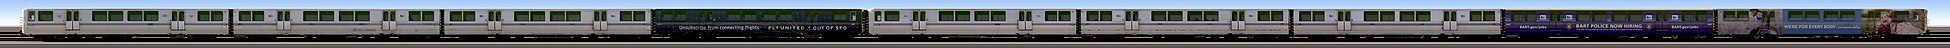 Line scan photo of nine car BART C1 train in 2017